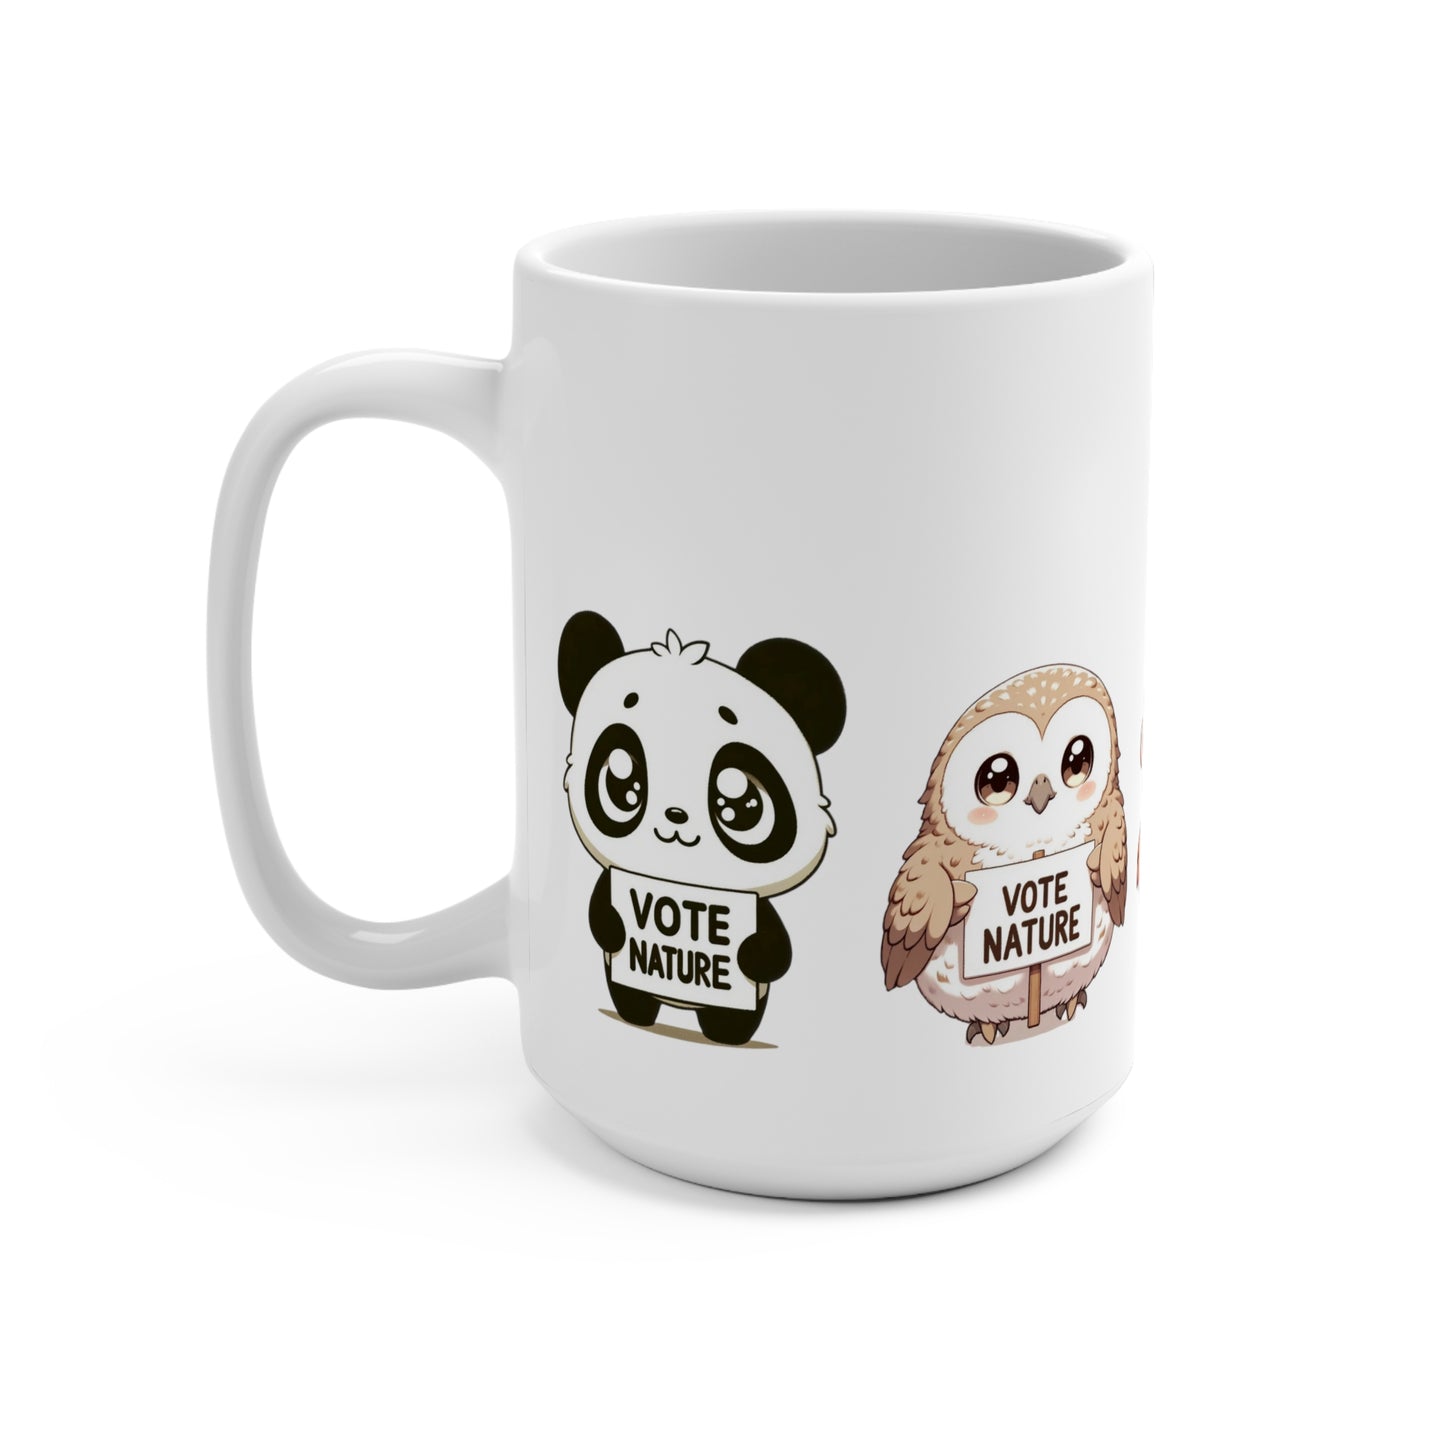 All the Cuteness! Inspirational Statement Coffee Mug (15oz): Vote Nature! Cute orangutan, fox, panda, owl, and cat! All in one!